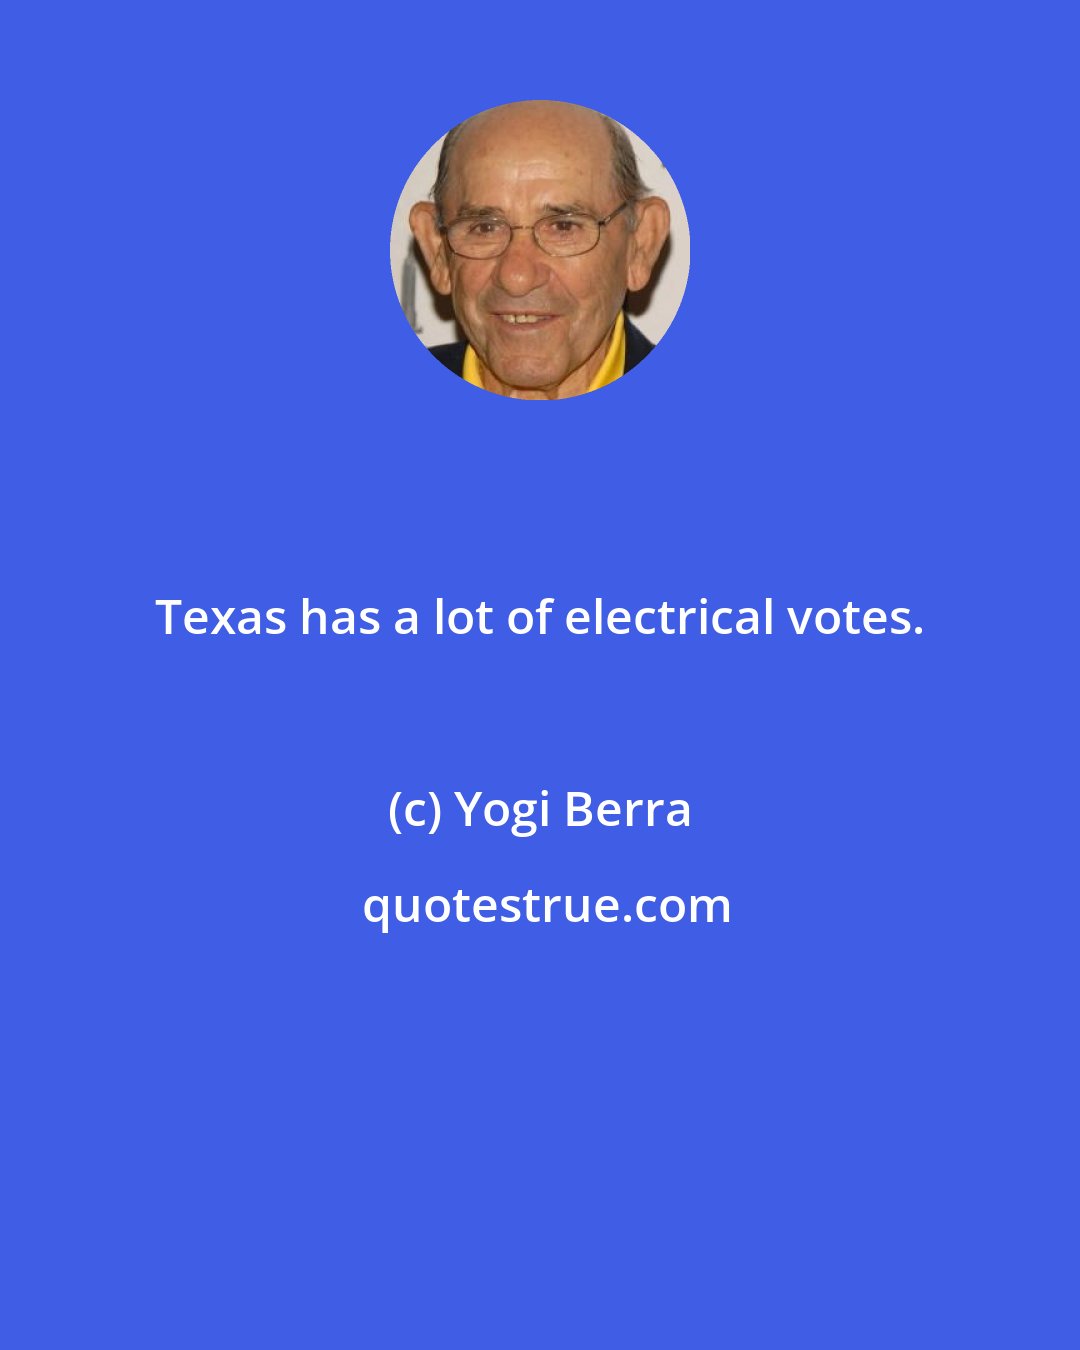 Yogi Berra: Texas has a lot of electrical votes.